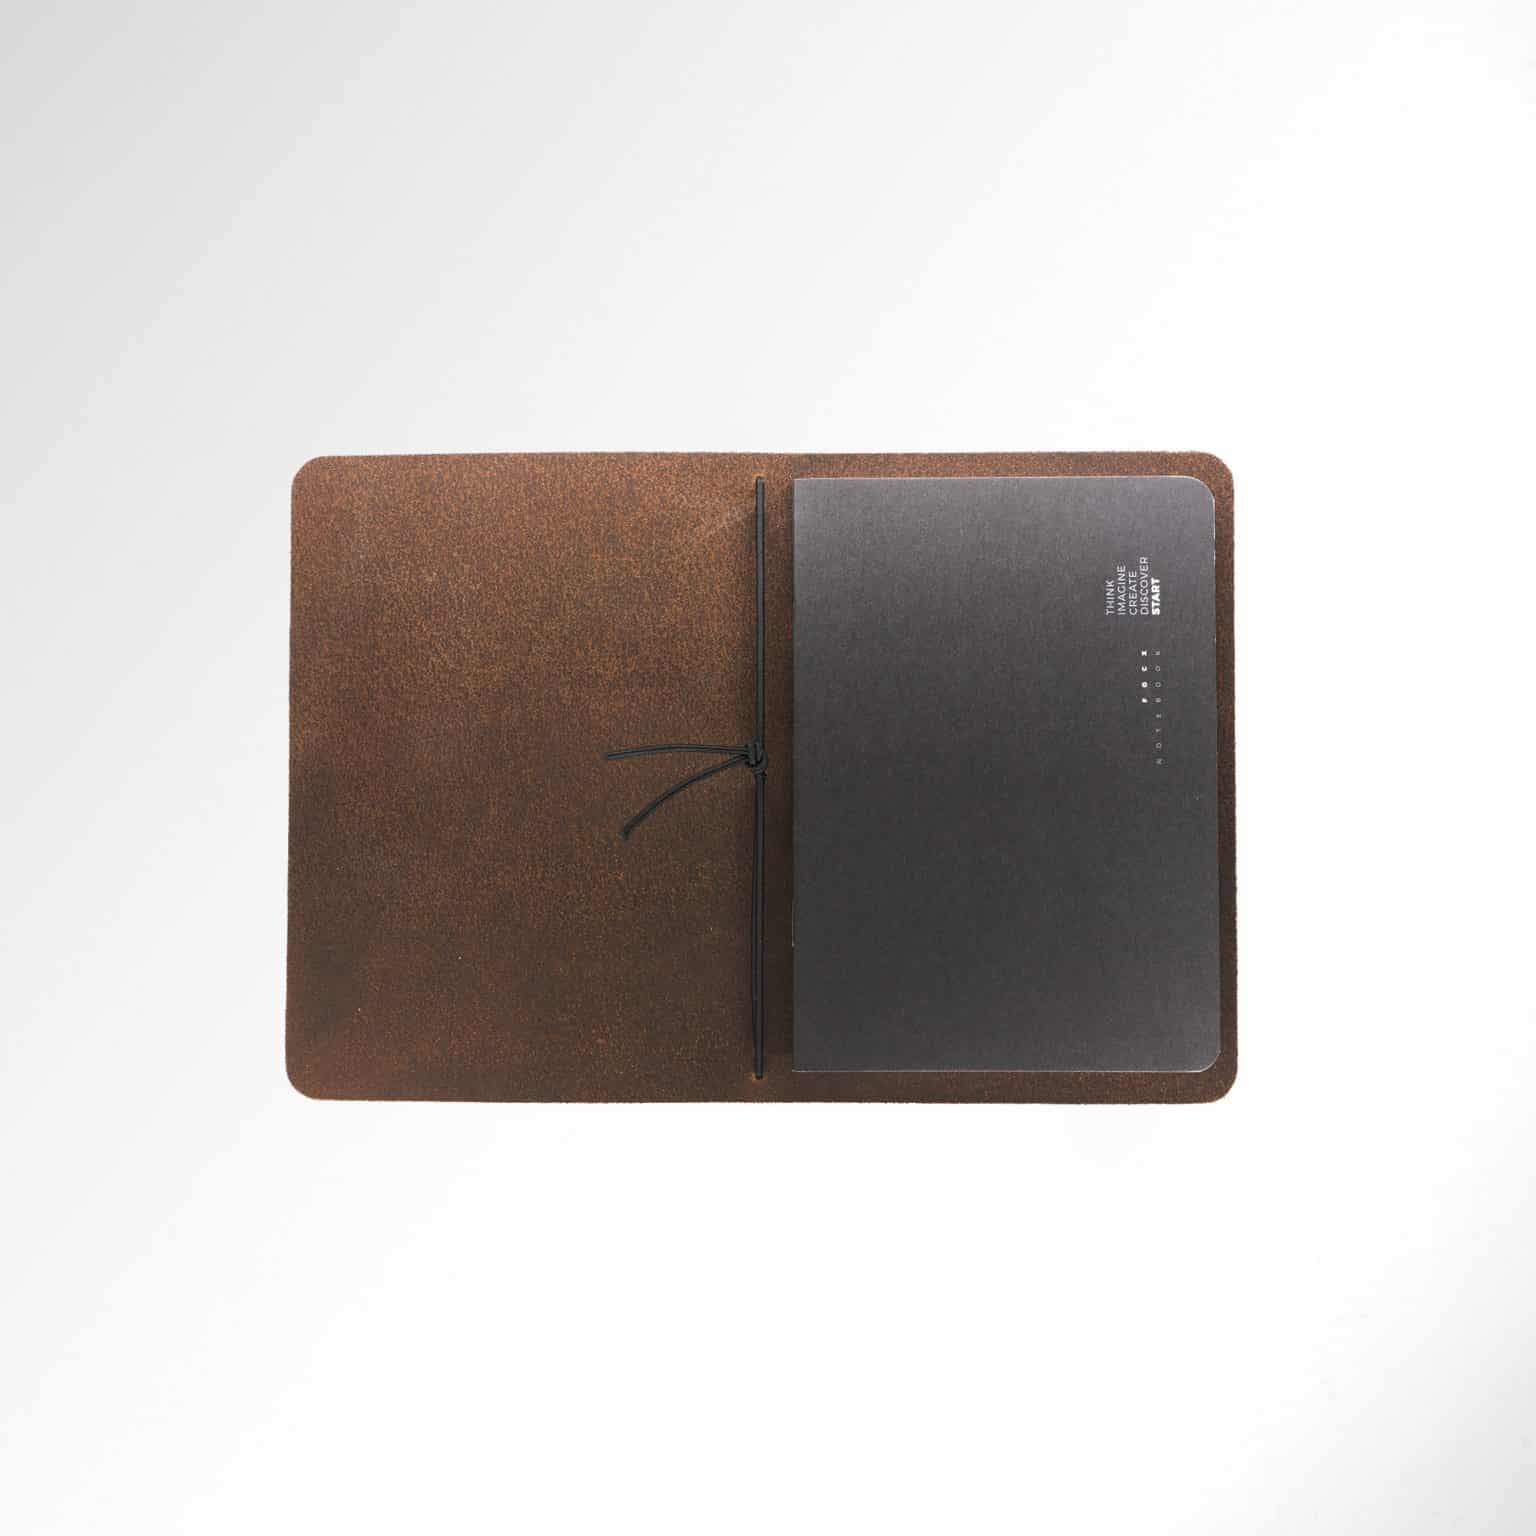 Compact wallet designed for essential armazenamento